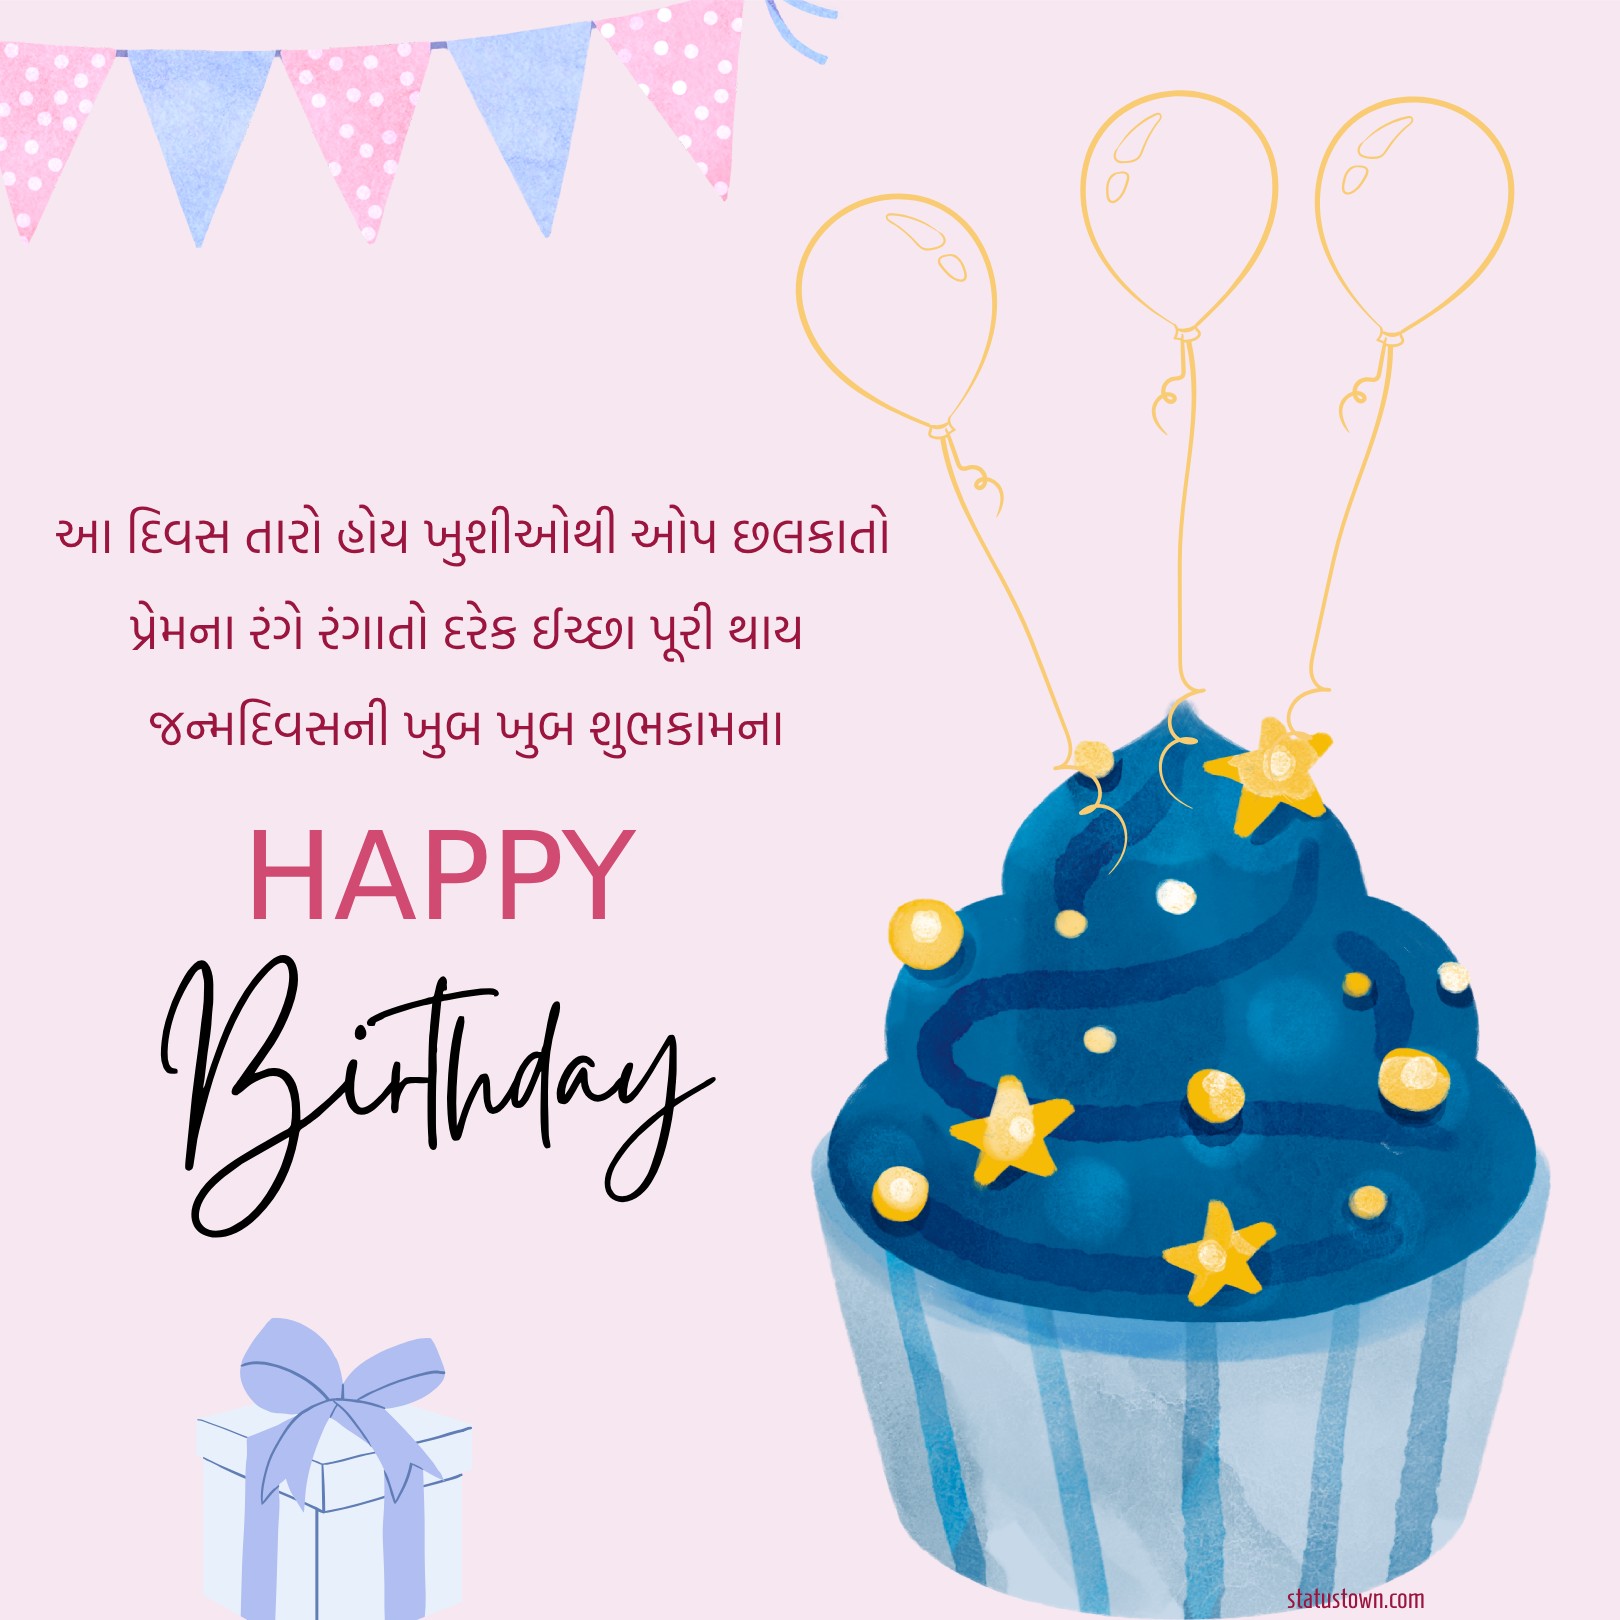 Short birthday wishes for boyfriend in gujarati